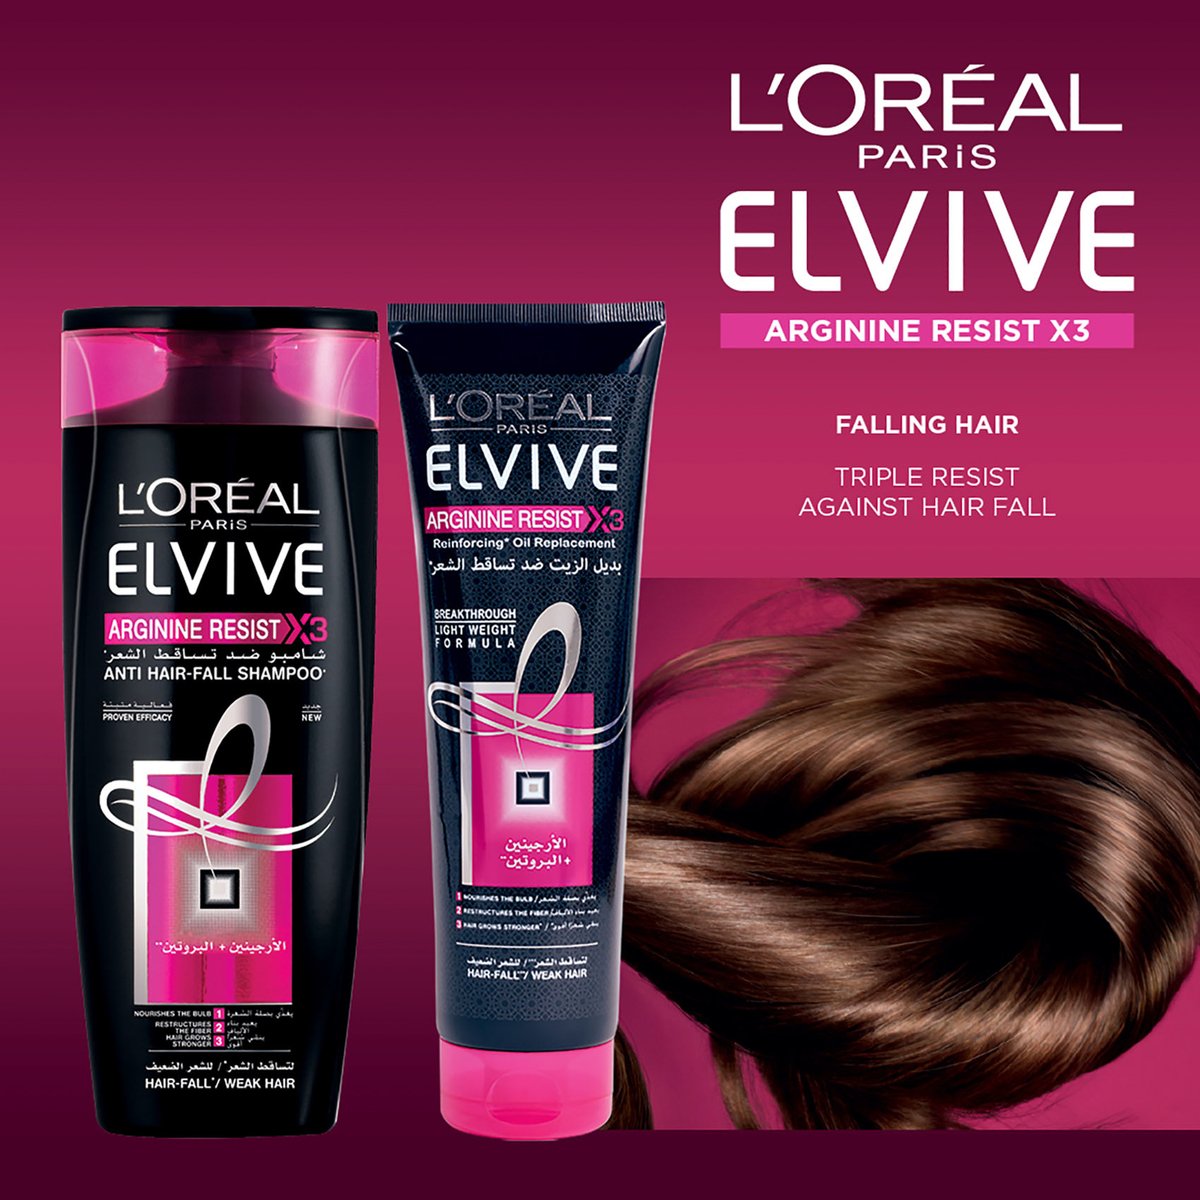 L'Oreal Elvive Arginine Resist Anti Hair Fall Shampoo 700 ml